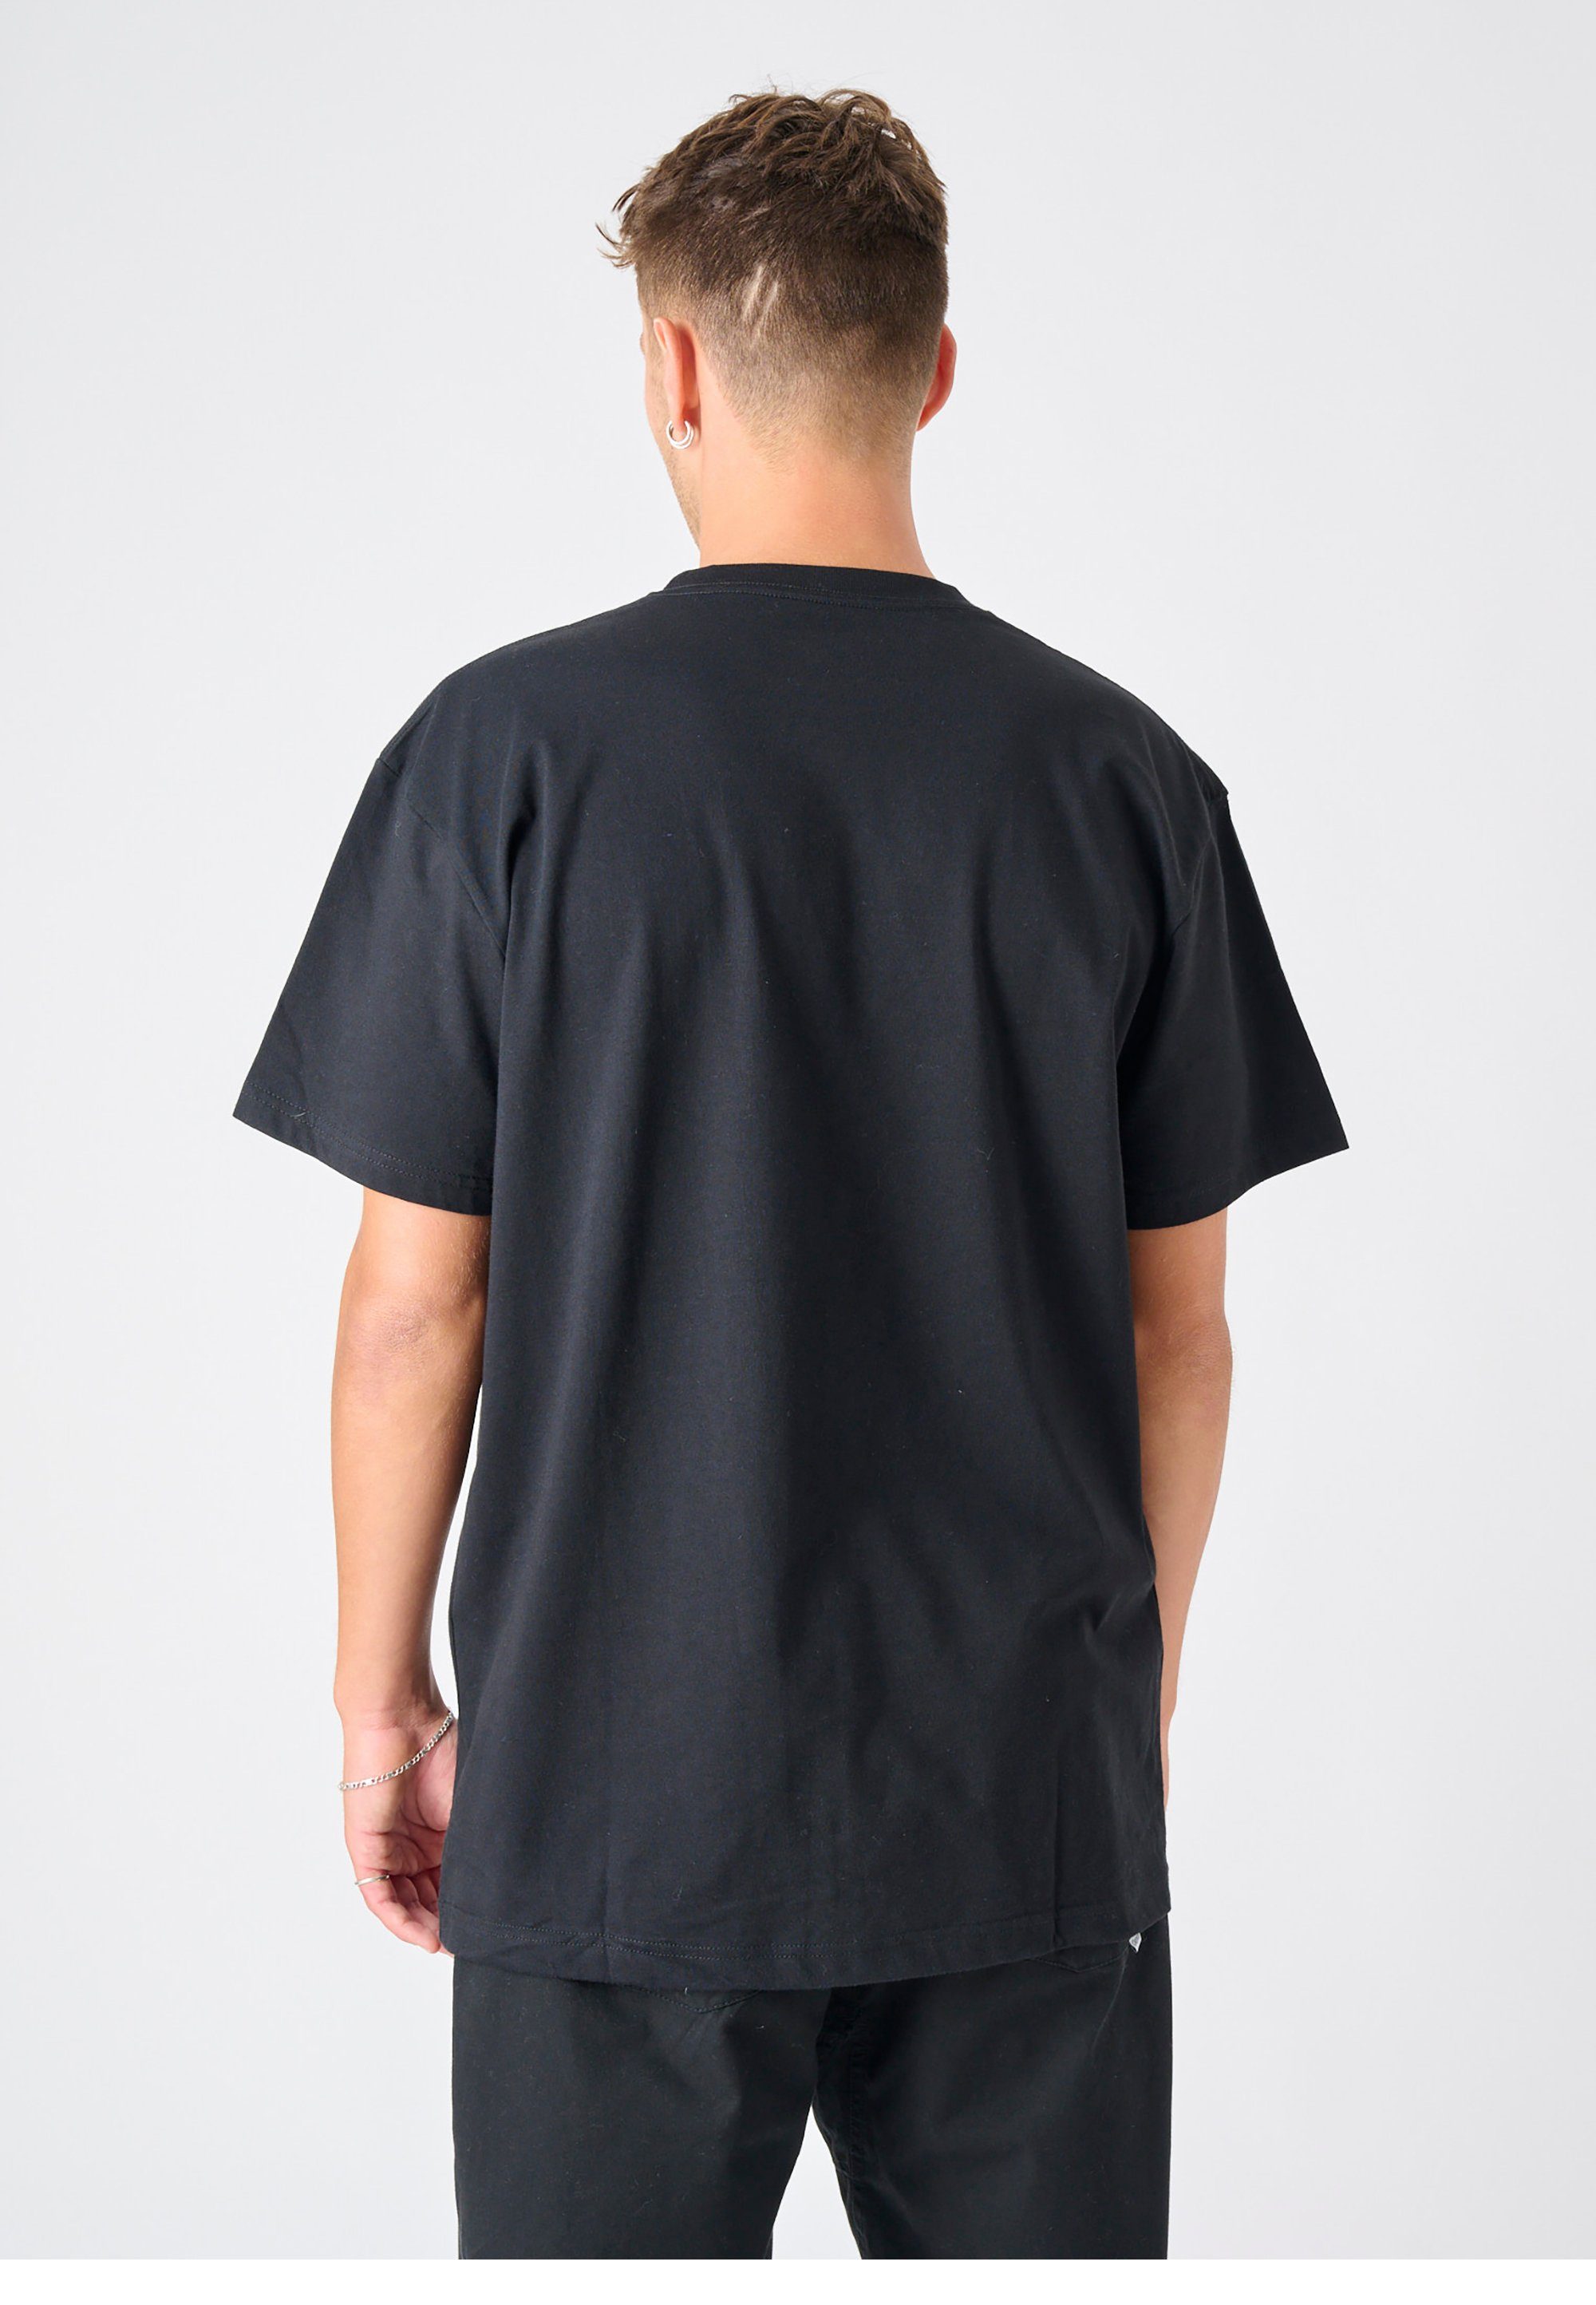 Mono schwarz Schnitt Gull T-Shirt Cleptomanicx mit Embroidery lockerem